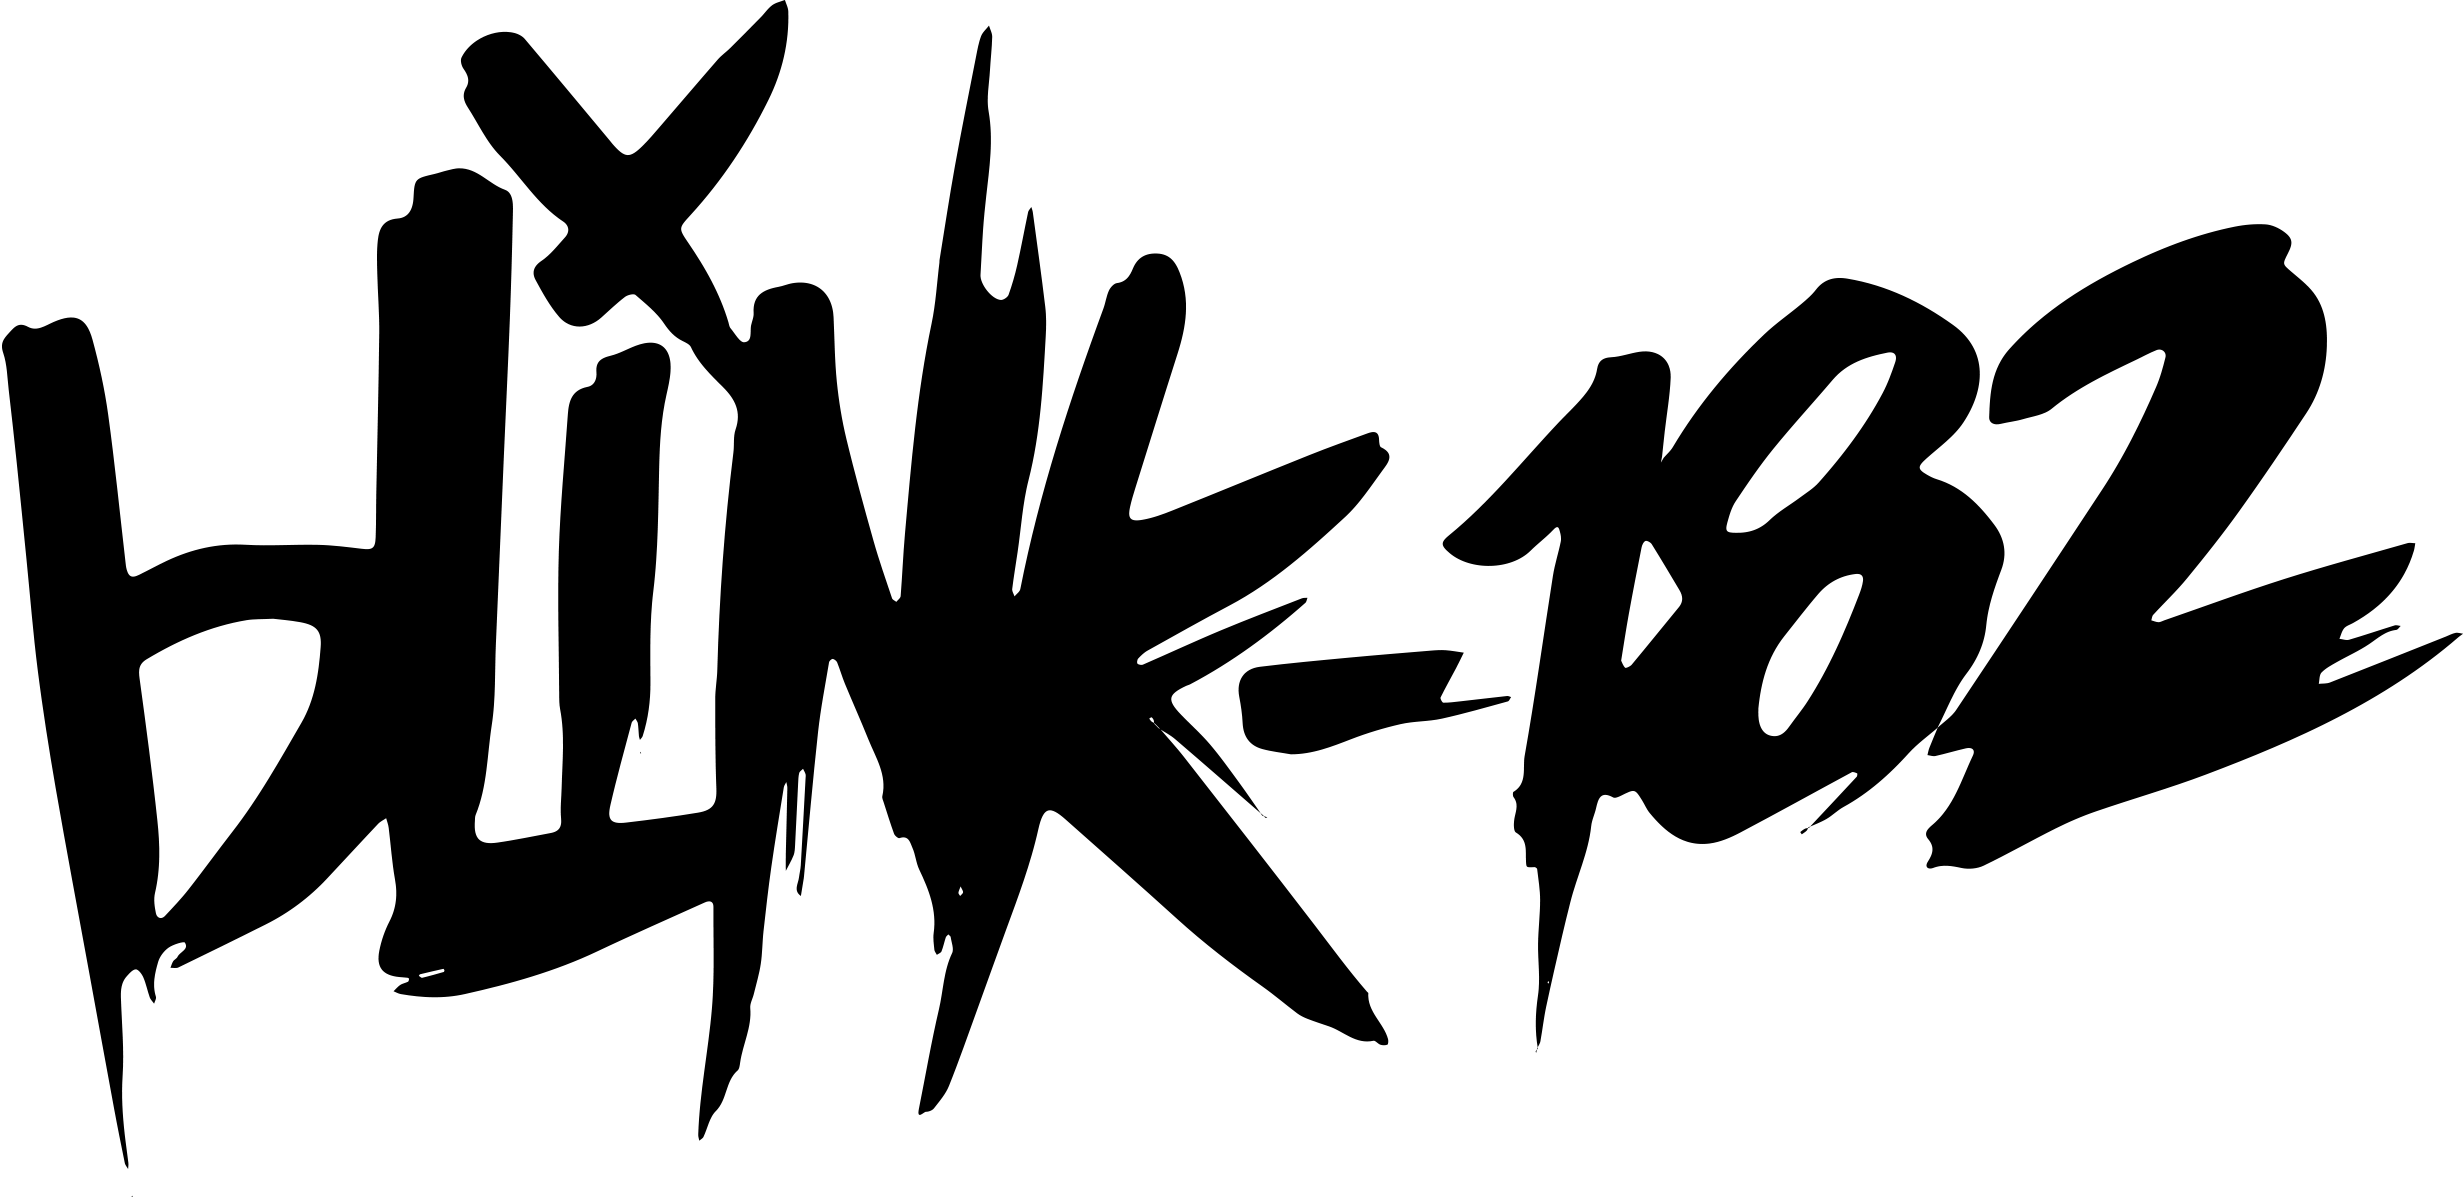 Free download Blink 182 wallpaper Blink 182 wallpaper Blink 182 Blink 182  591x966 for your Desktop Mobile  Tablet  Explore 48 Blink 182 iPhone  Hd Wallpapers  Blink 182 Wallpapers Blink 182 Backgrounds Blink 182  Background